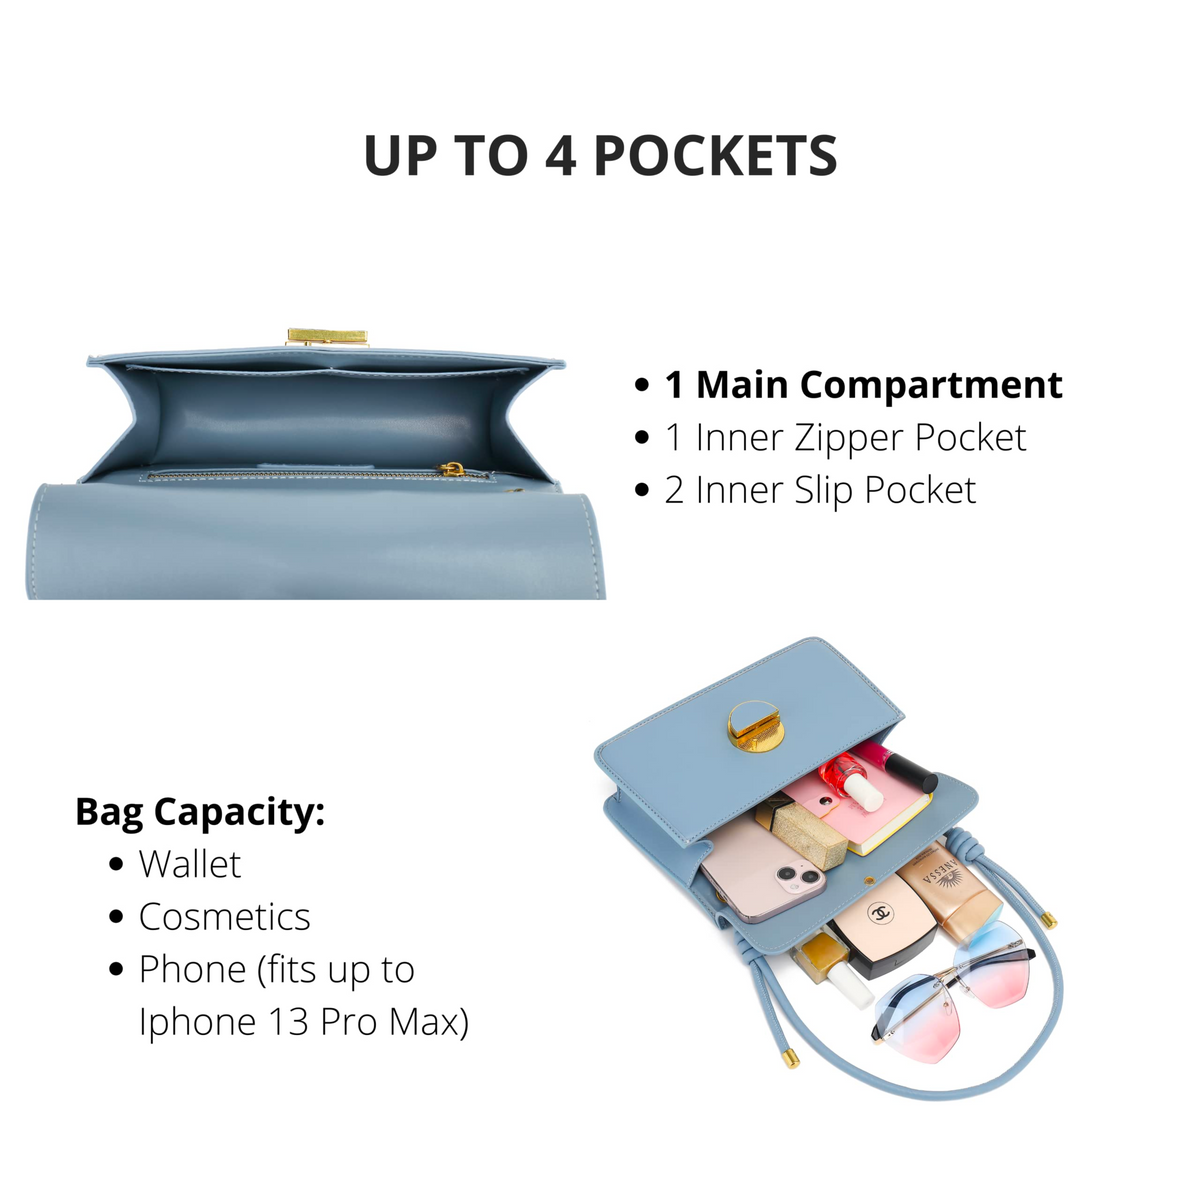 Small Crossbody Bag purse for Women,leather Shoulder handbag with  Adjustable Strap,Light Khaki，G140296